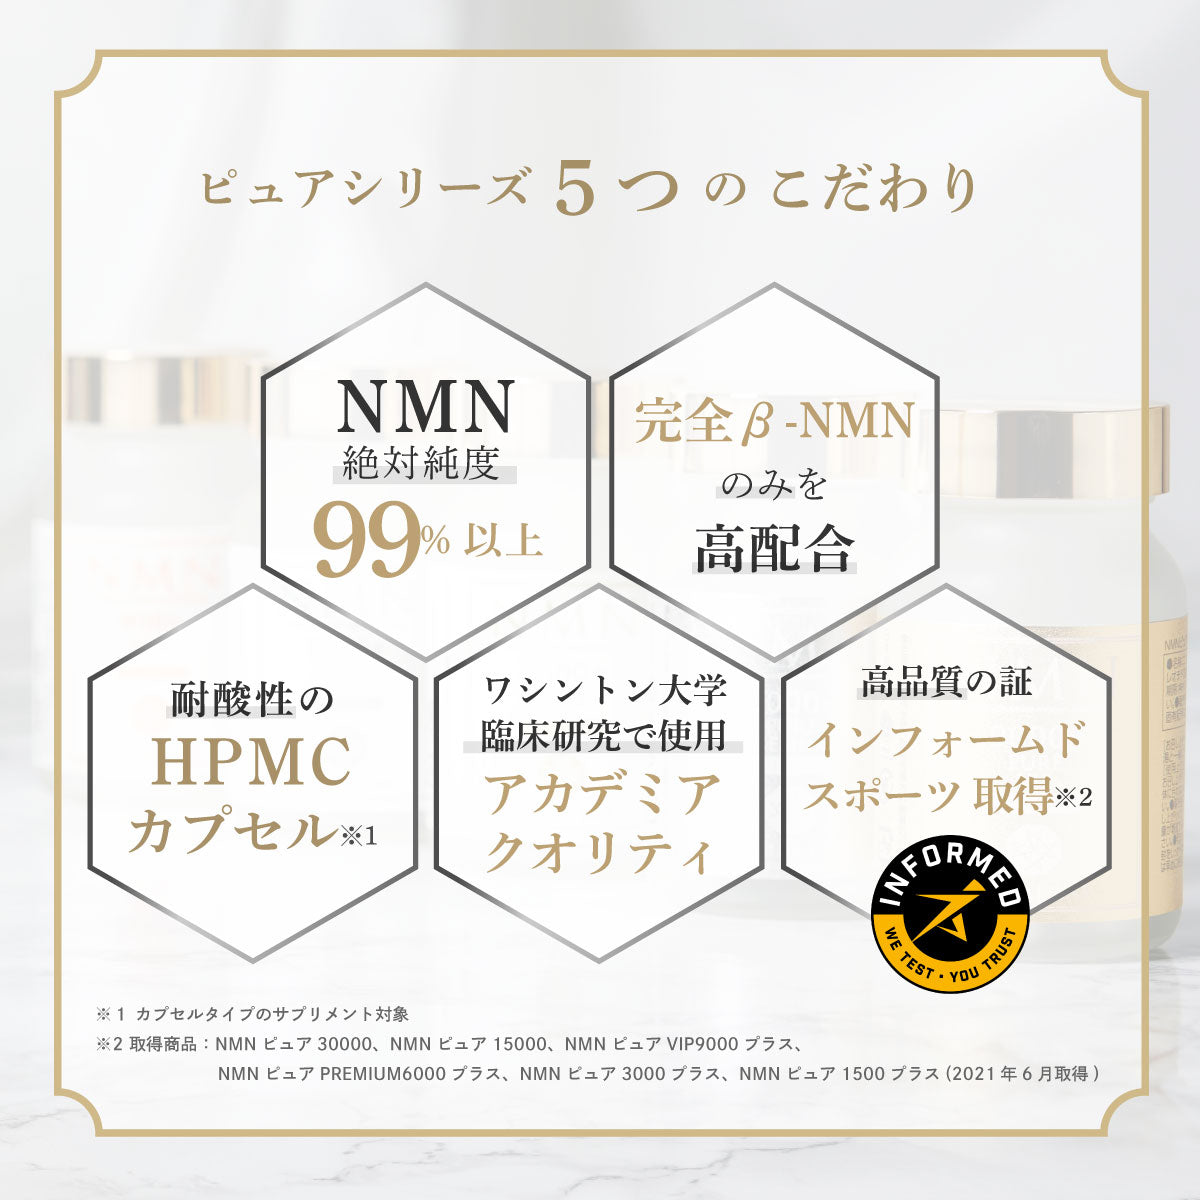 NMN纯1500加（60胶囊）